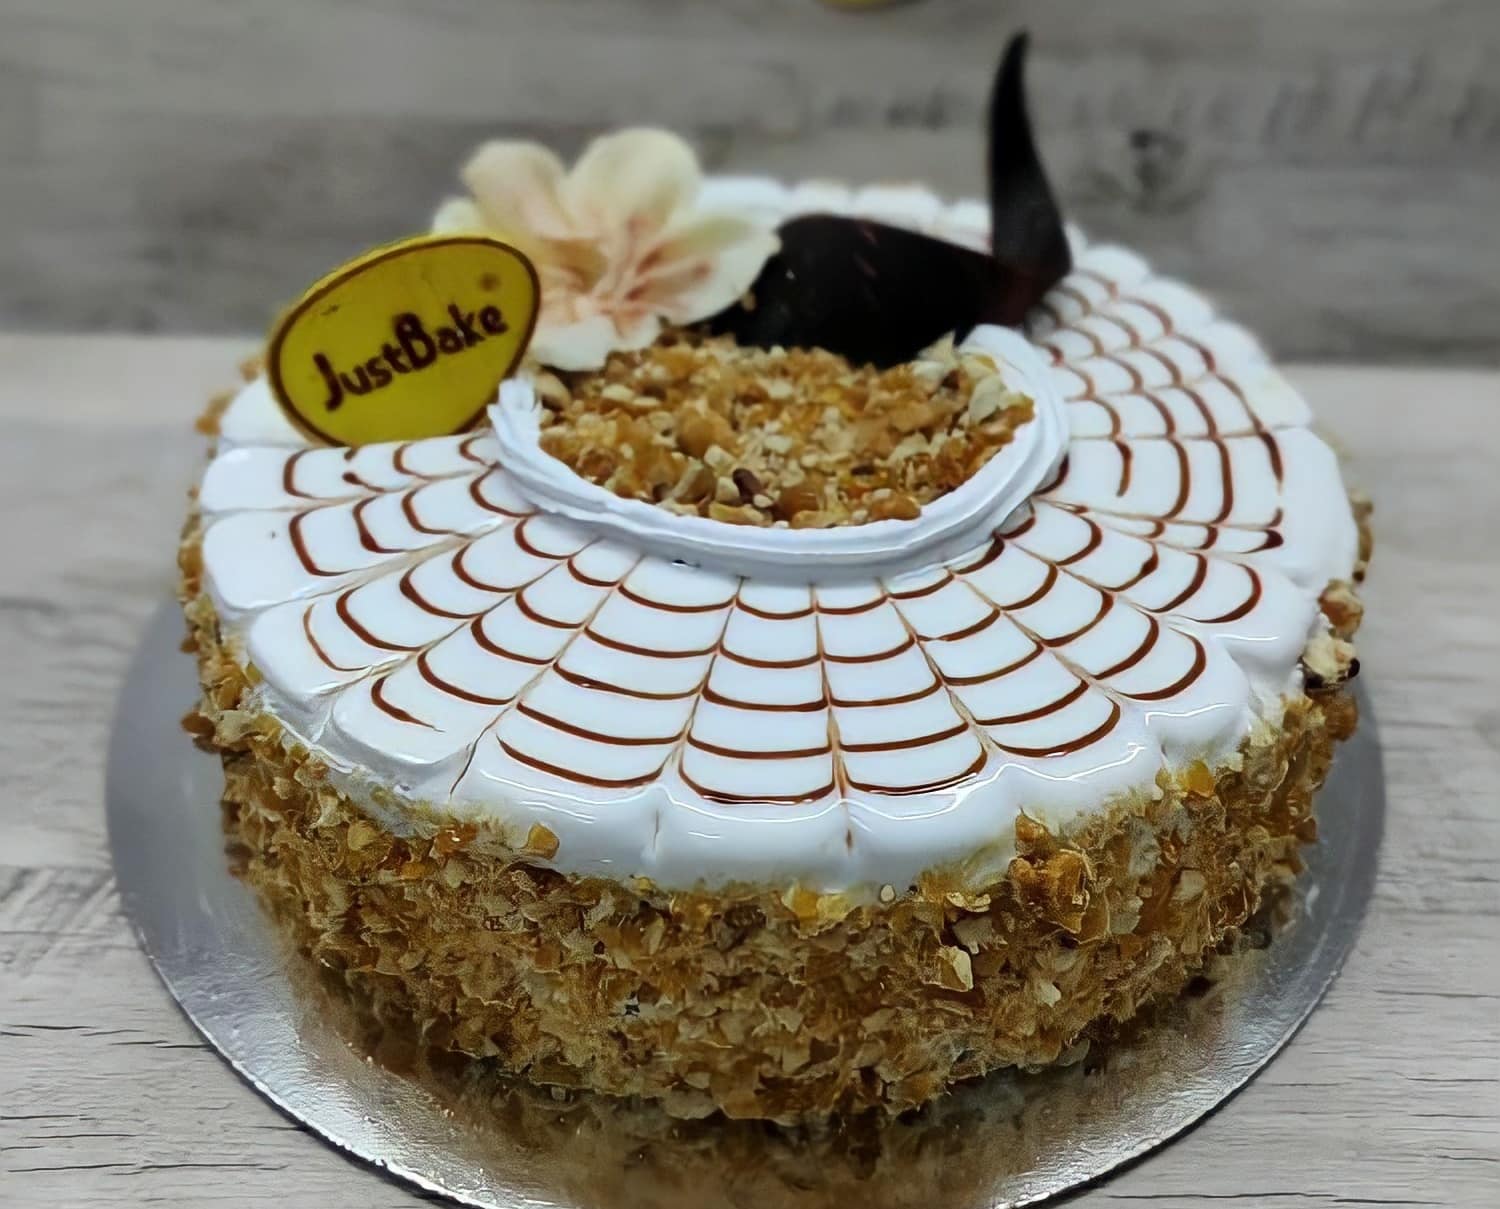 Online Express Cake Delivery | Order Cake for Express Delivery – Just bake